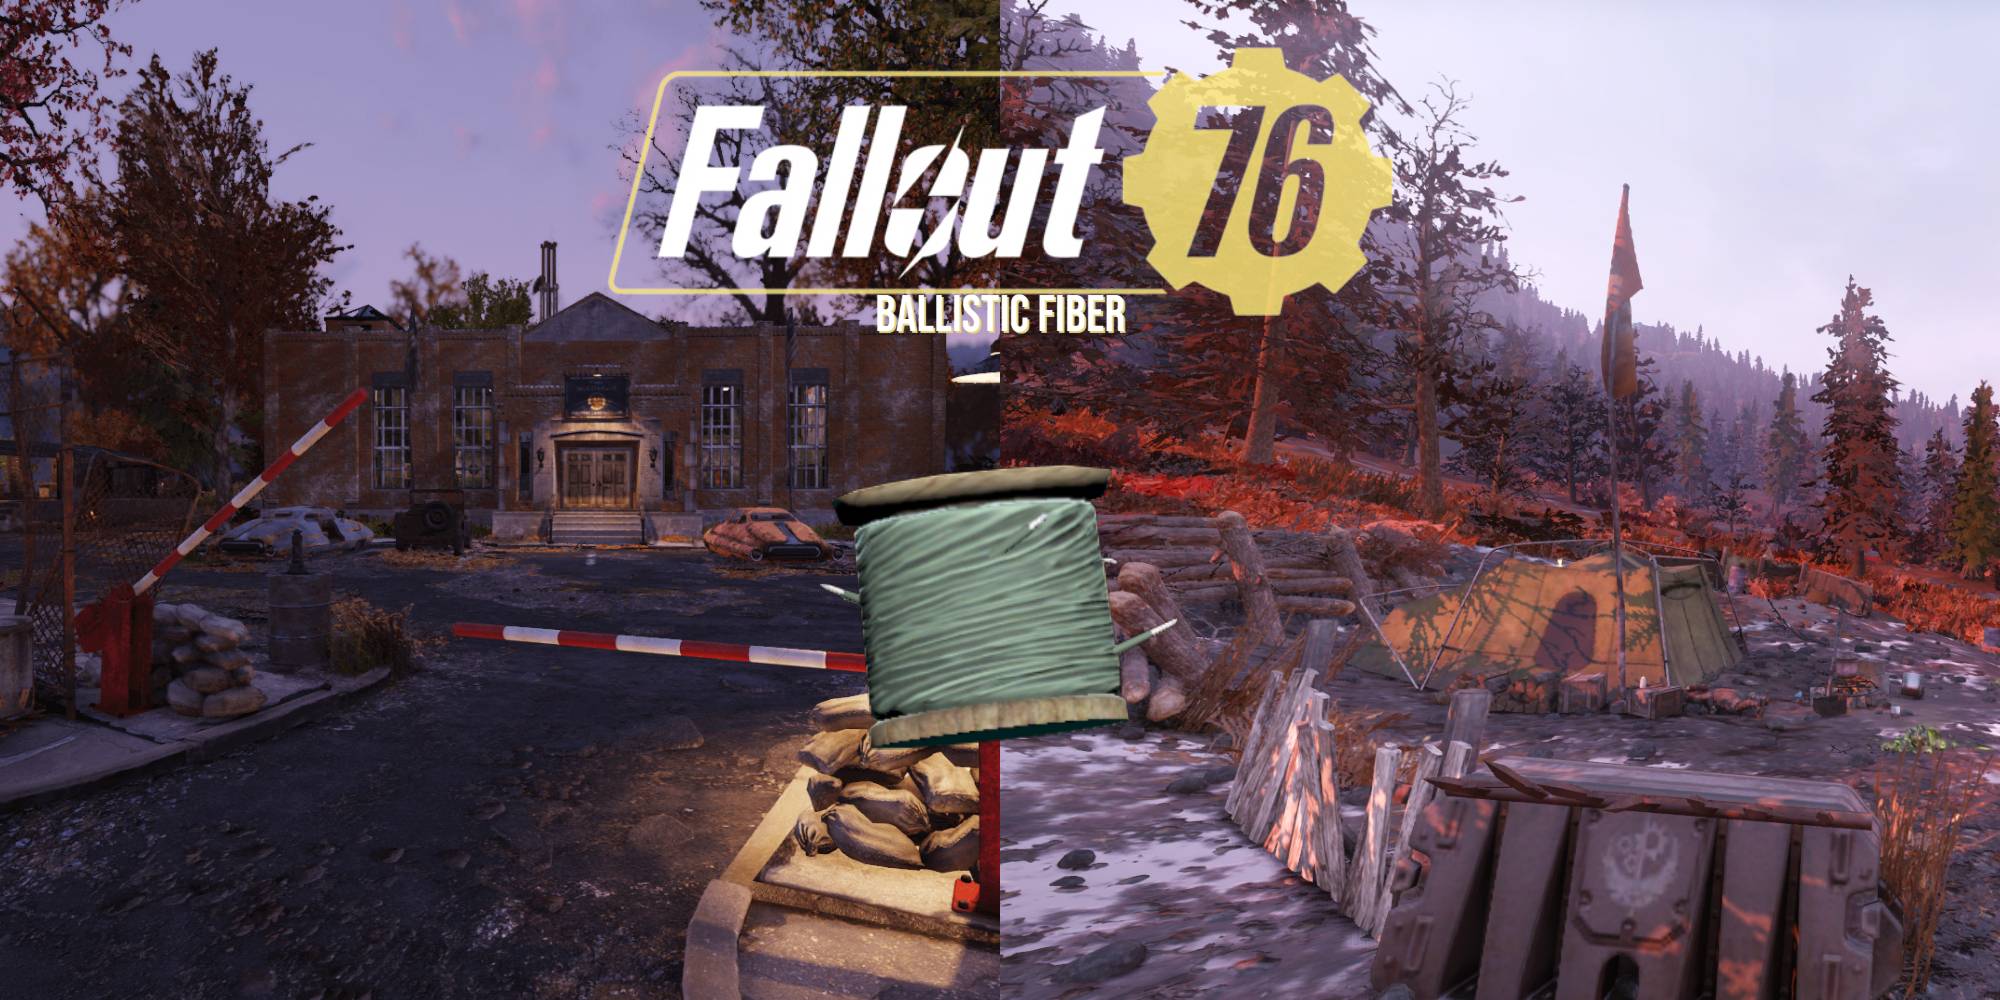 Fallout 76 camp mcclintock